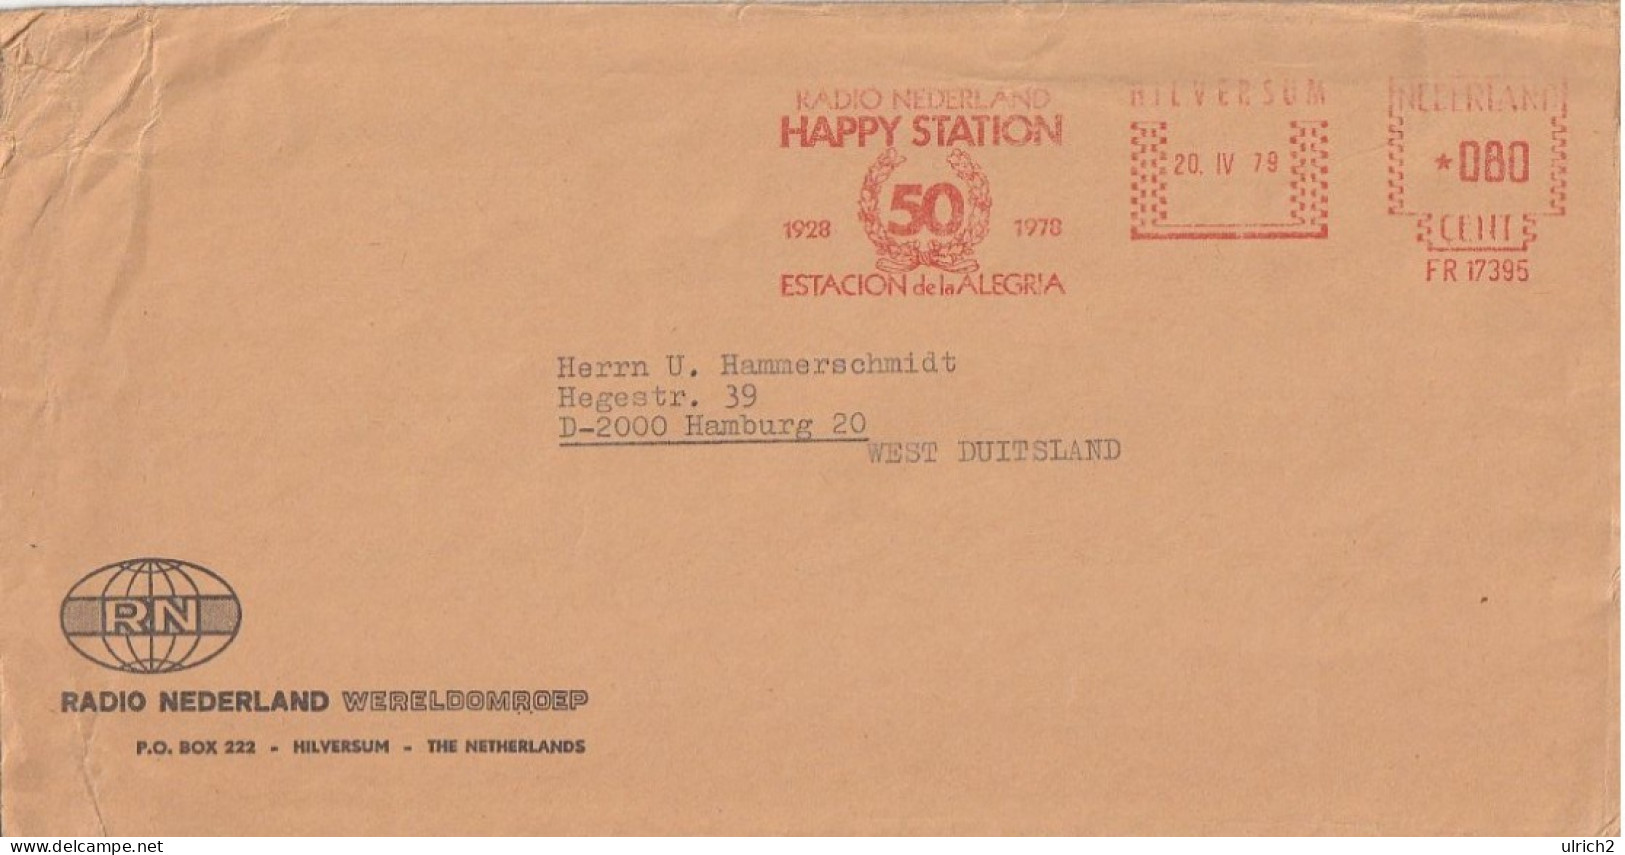 Netherlands - Radio Nederland Happy Station 50 Years - 1979 (67147) - Covers & Documents